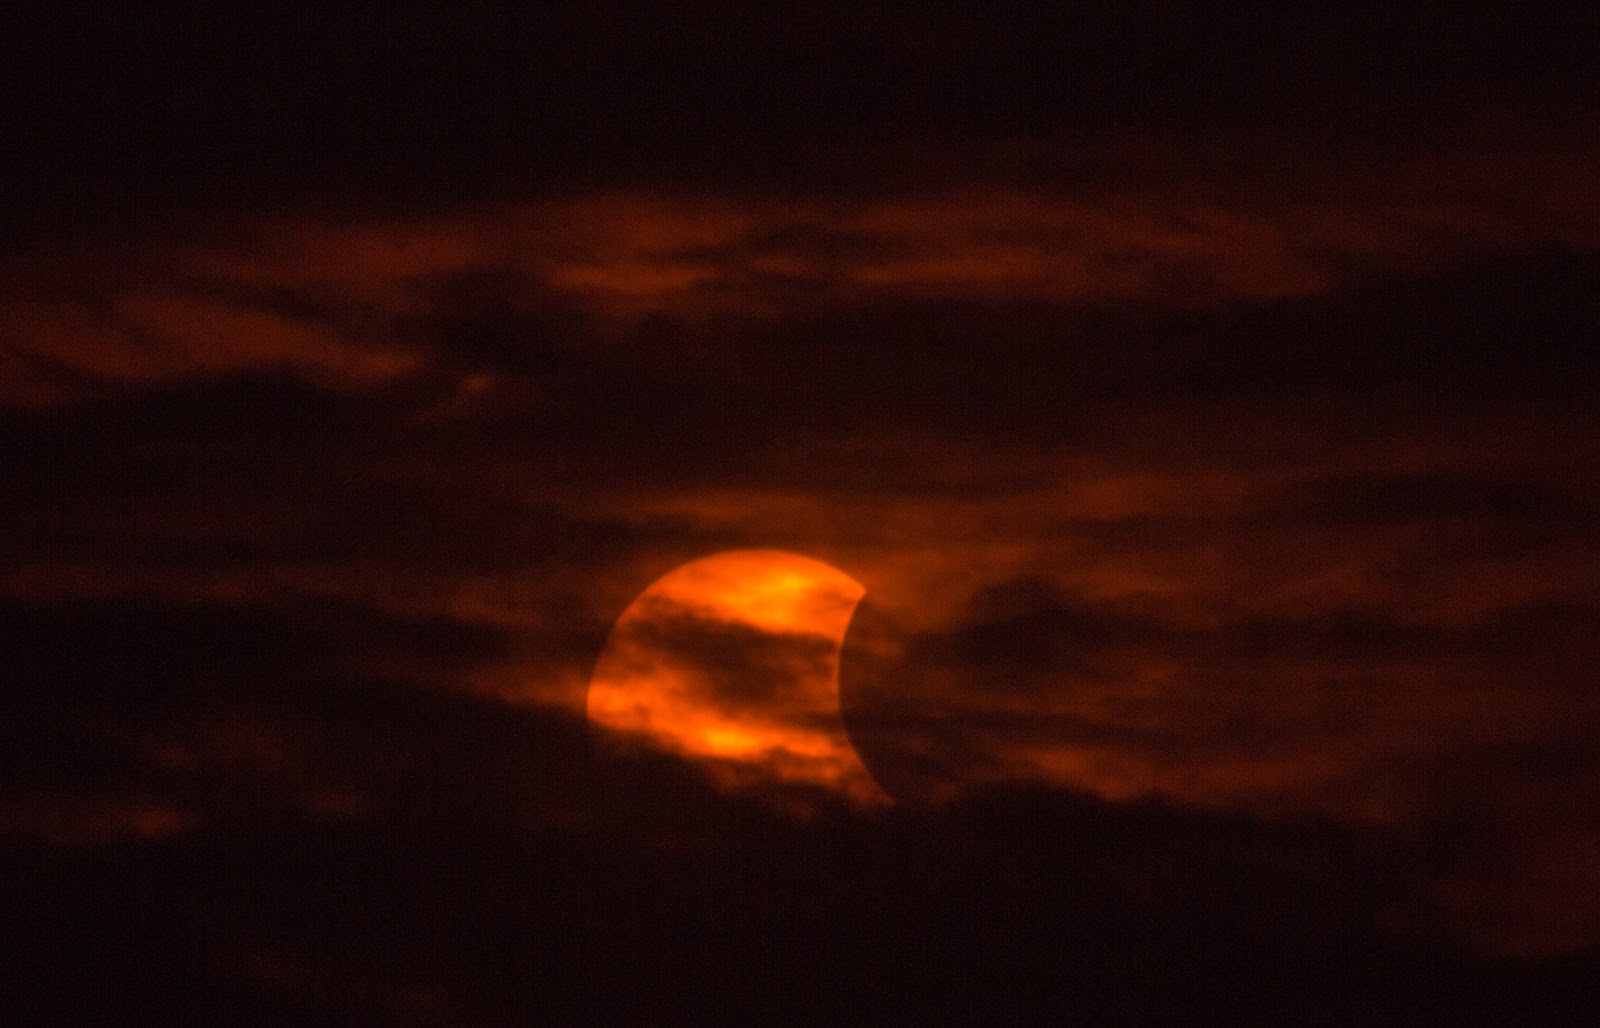 October 23 Partial Solar Eclipse